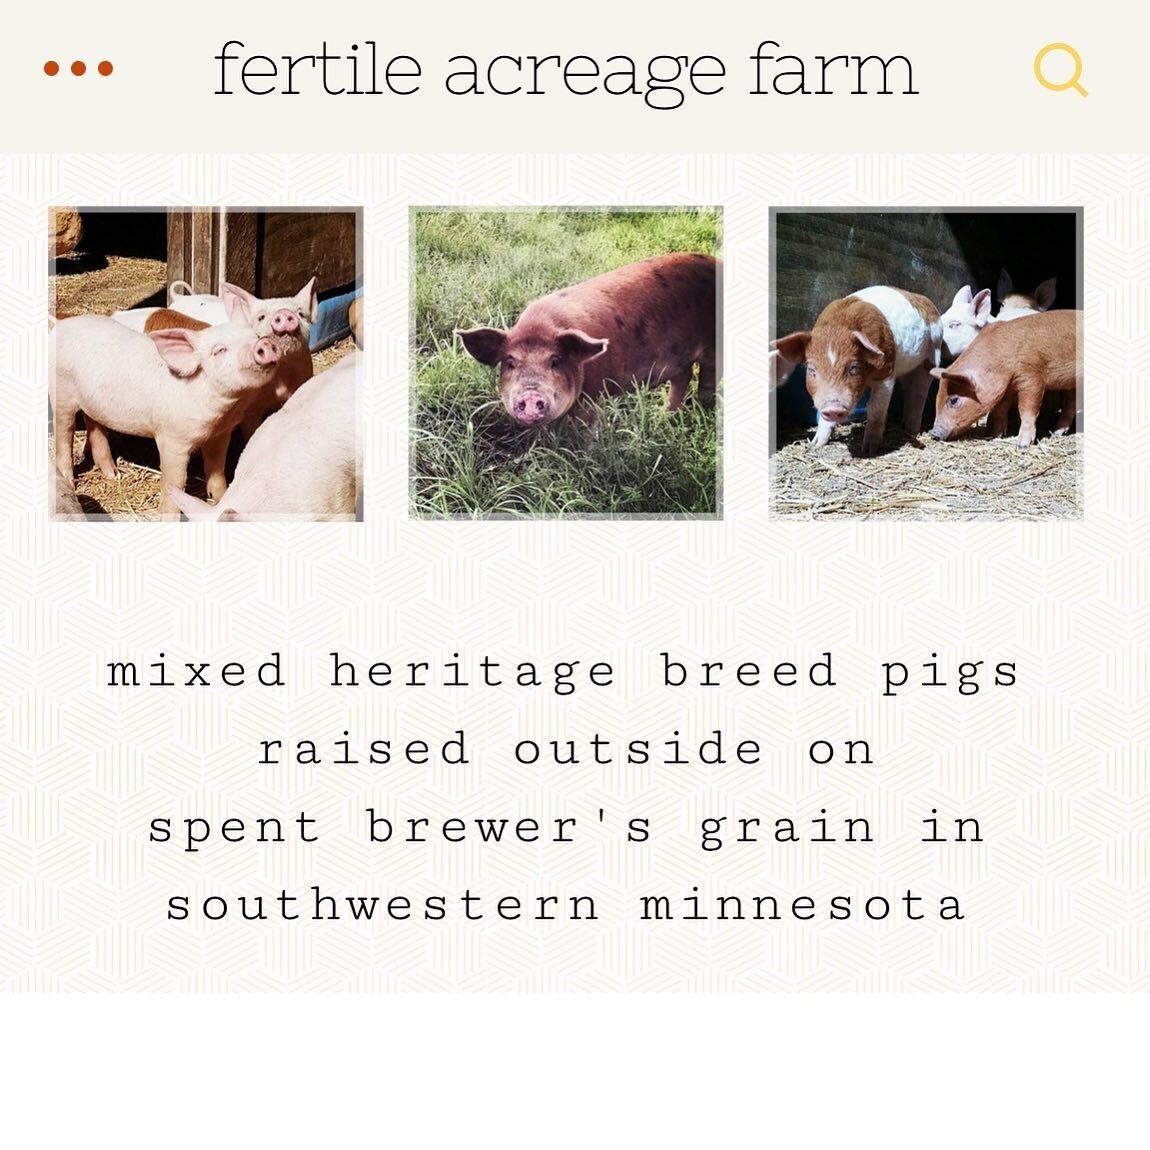 we have a website: fertileacreagefarm.com
YEEHAW!!